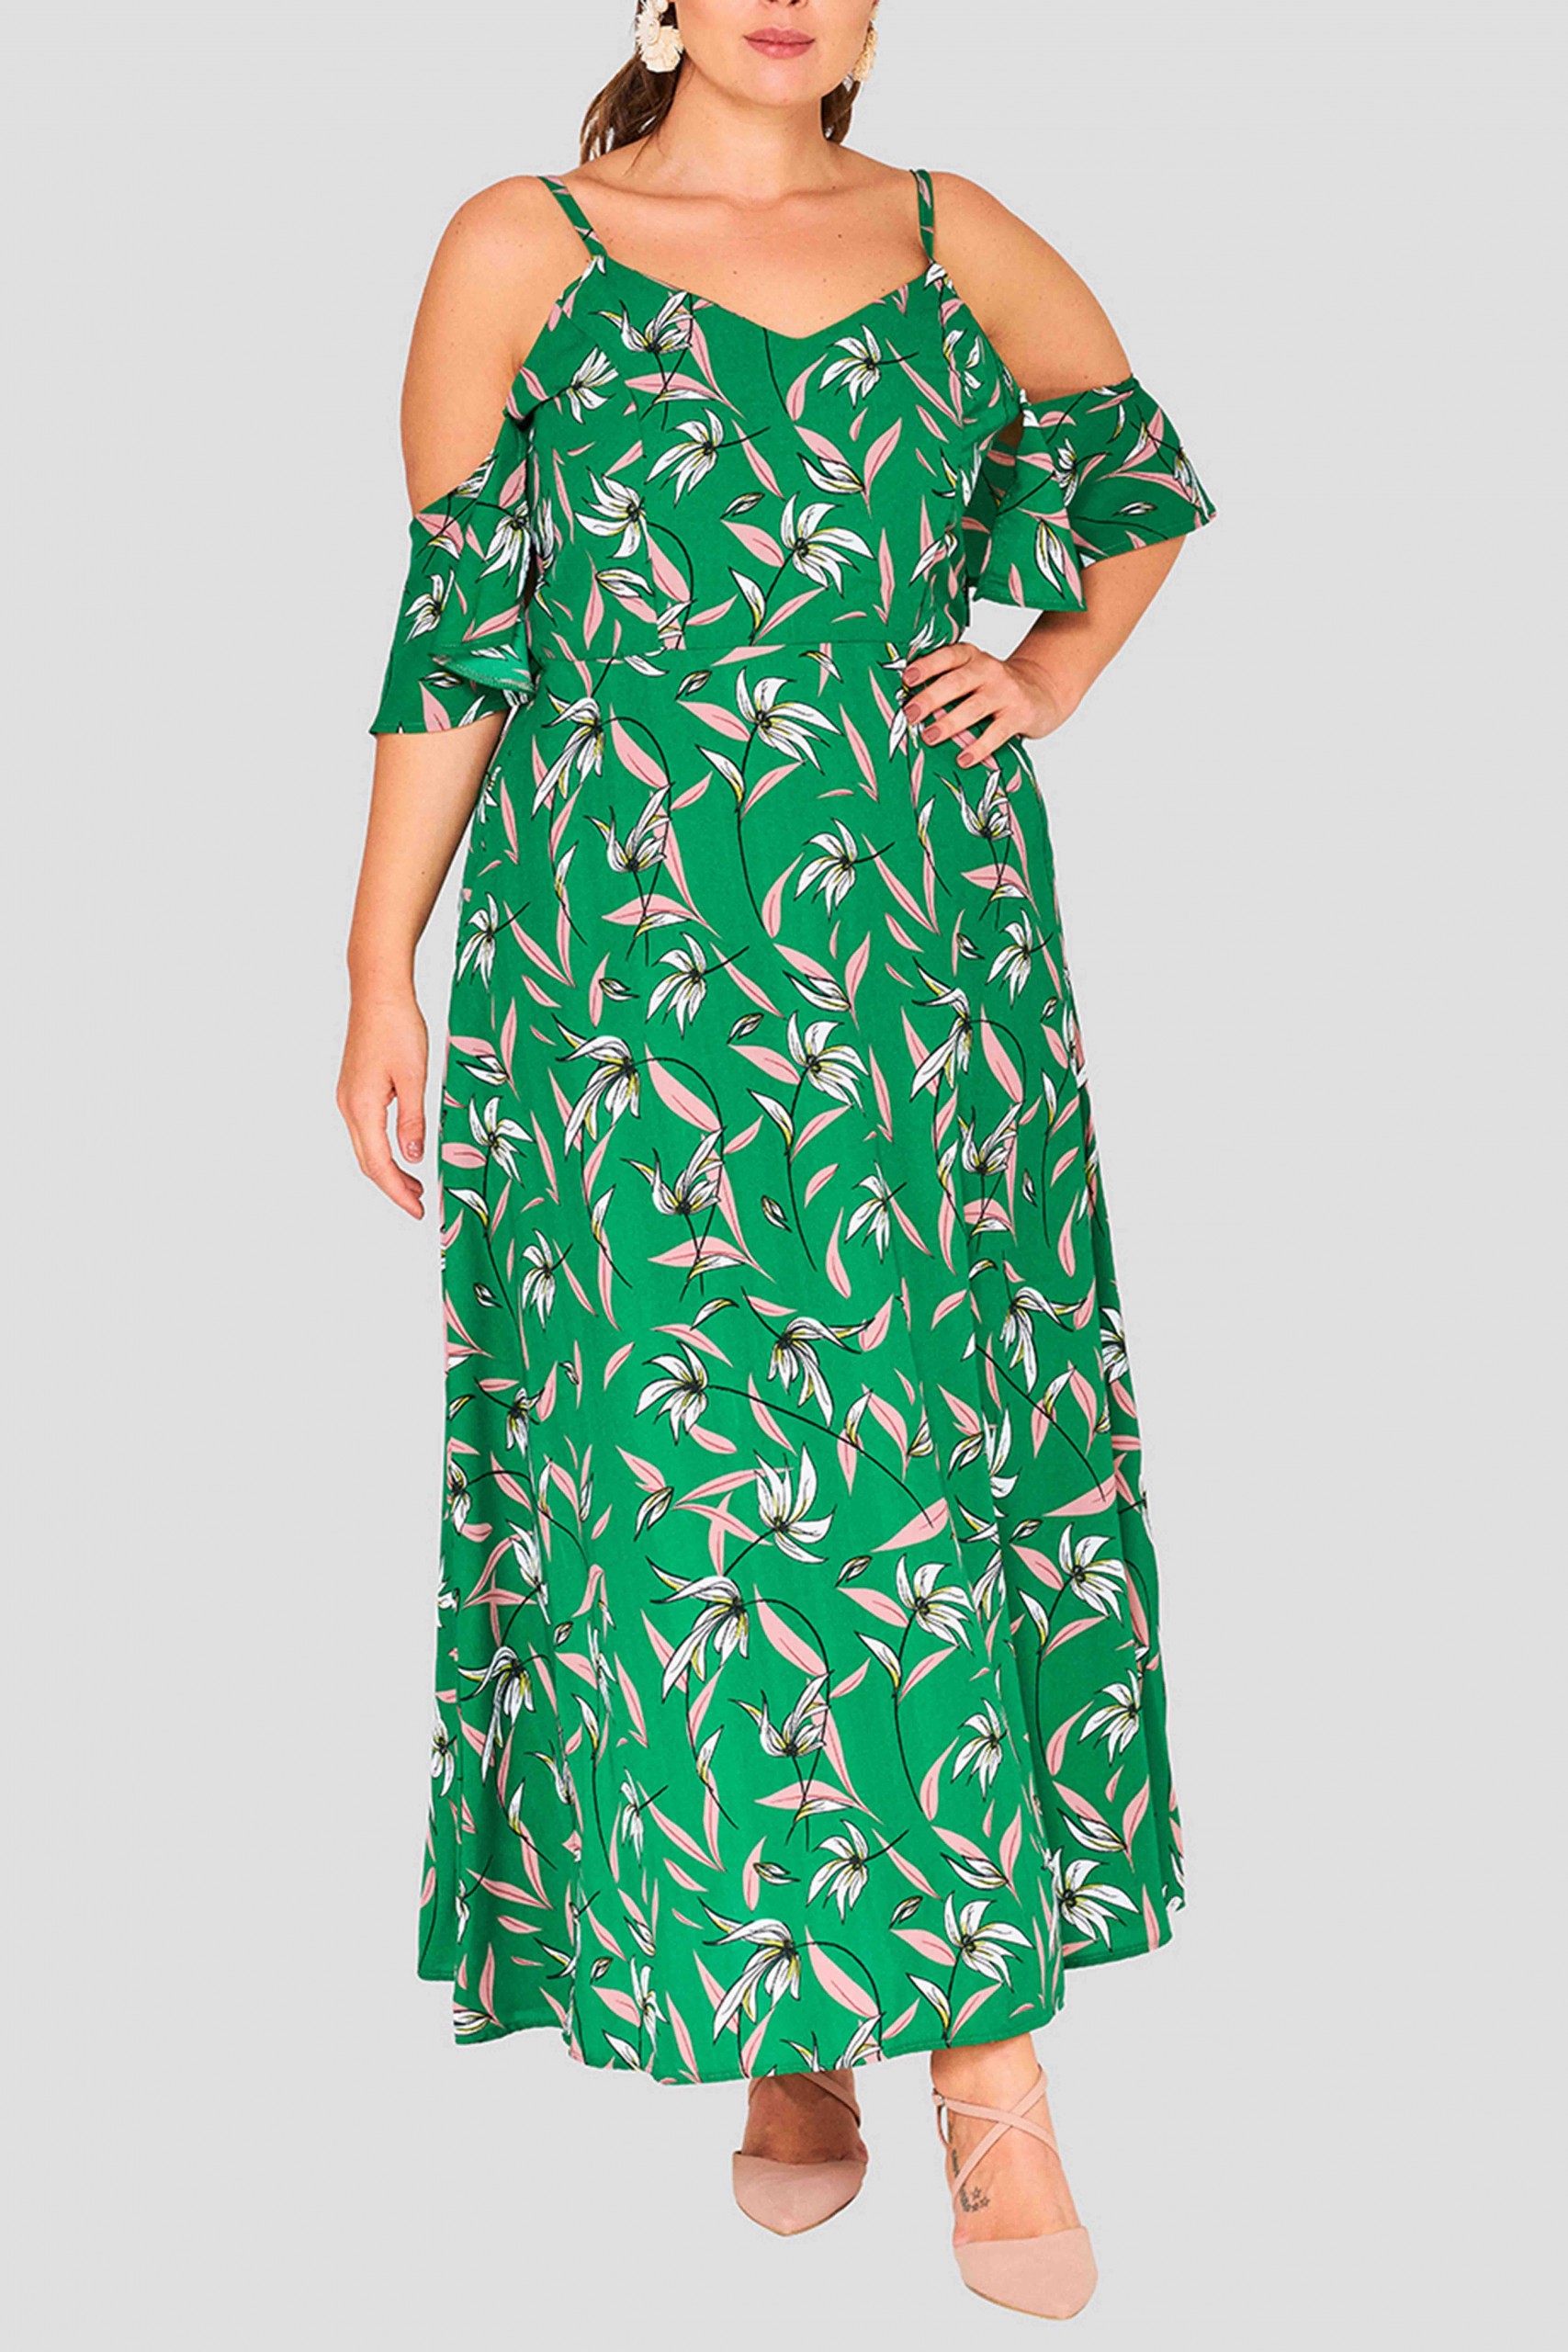 Smitsom sygdom knap cigar Plus Size Green Maxi Dress | Curvy Chic Online - Plus Size Dresses